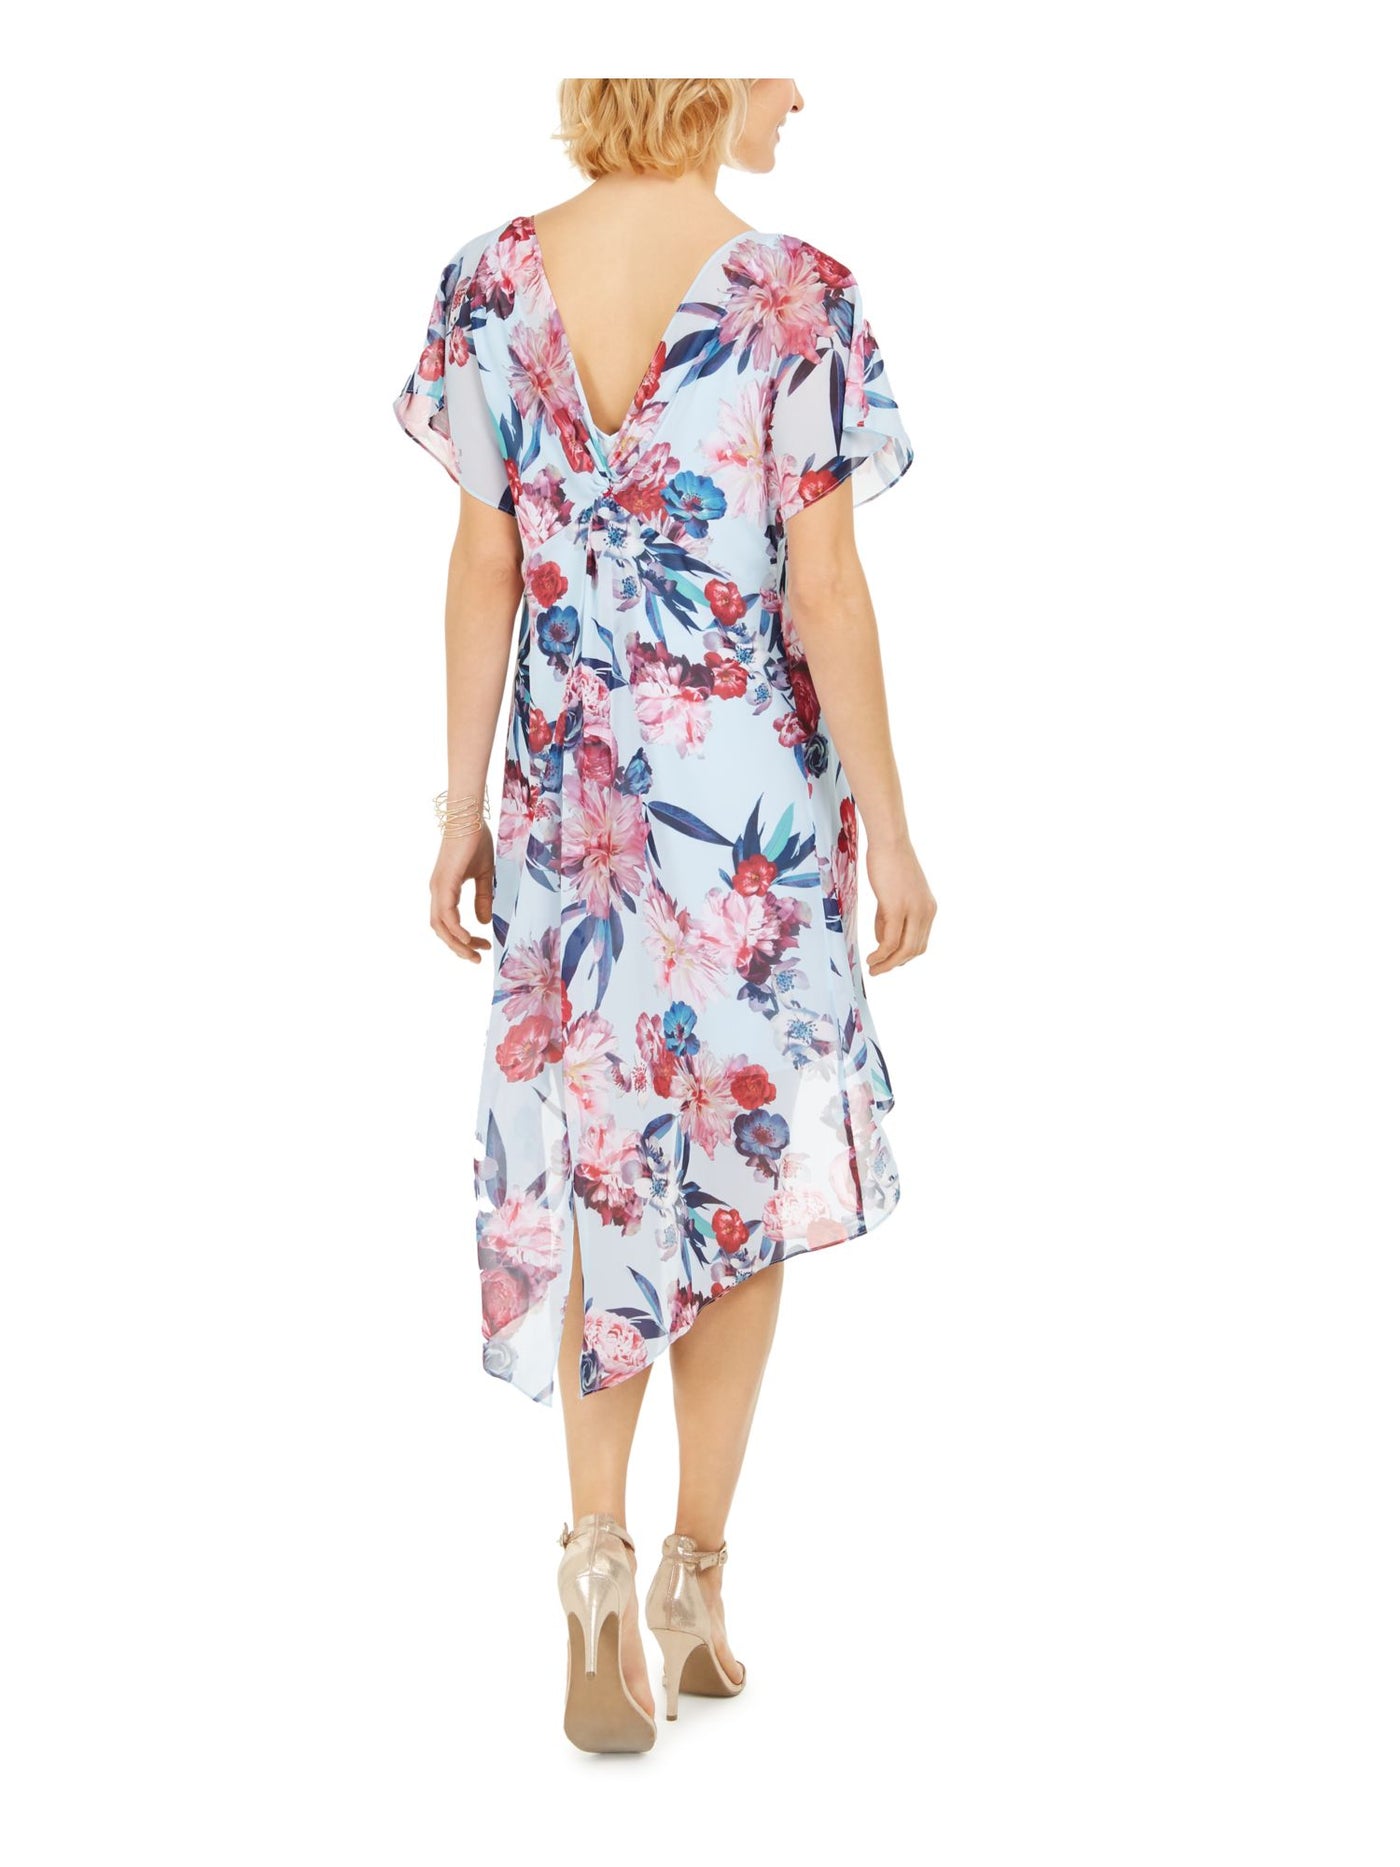 ADRIANNA PAPELL Womens Blue Floral Jewel Neck Tea-Length Hi-Lo Dress Size: XS